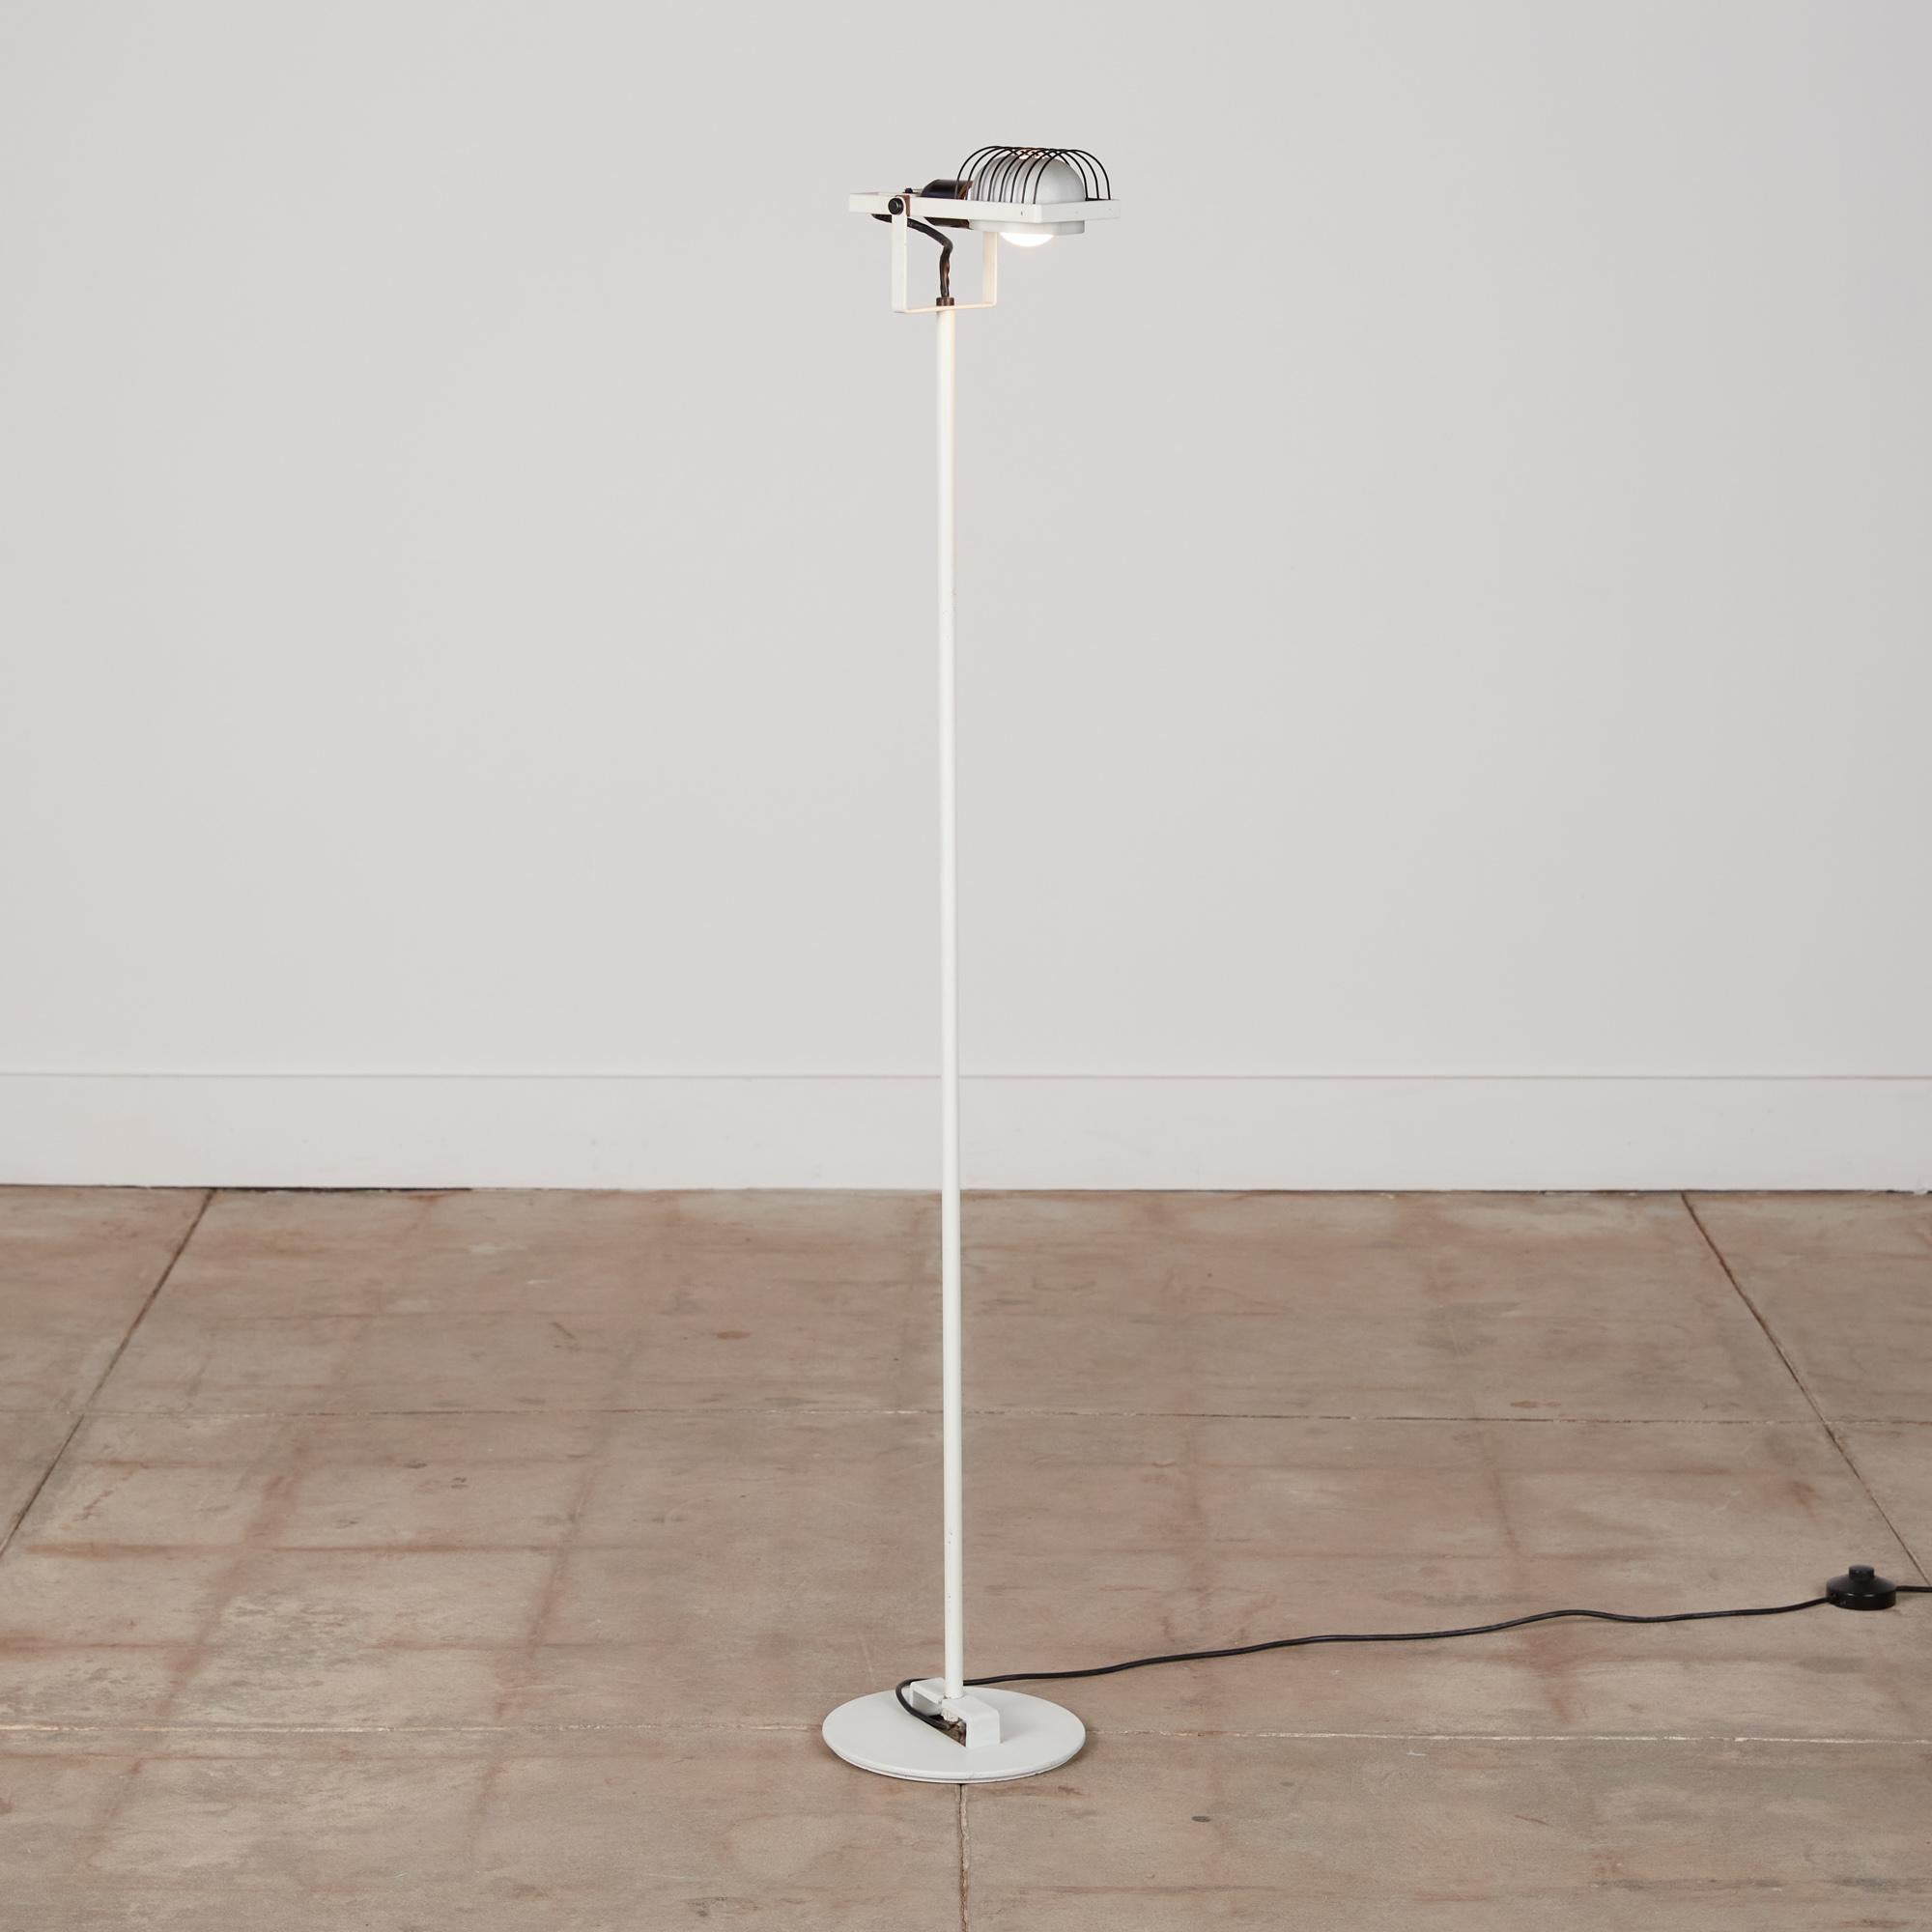 Italian Ernesto Gismondi “Sintesi” Floor Lamp for Artemide